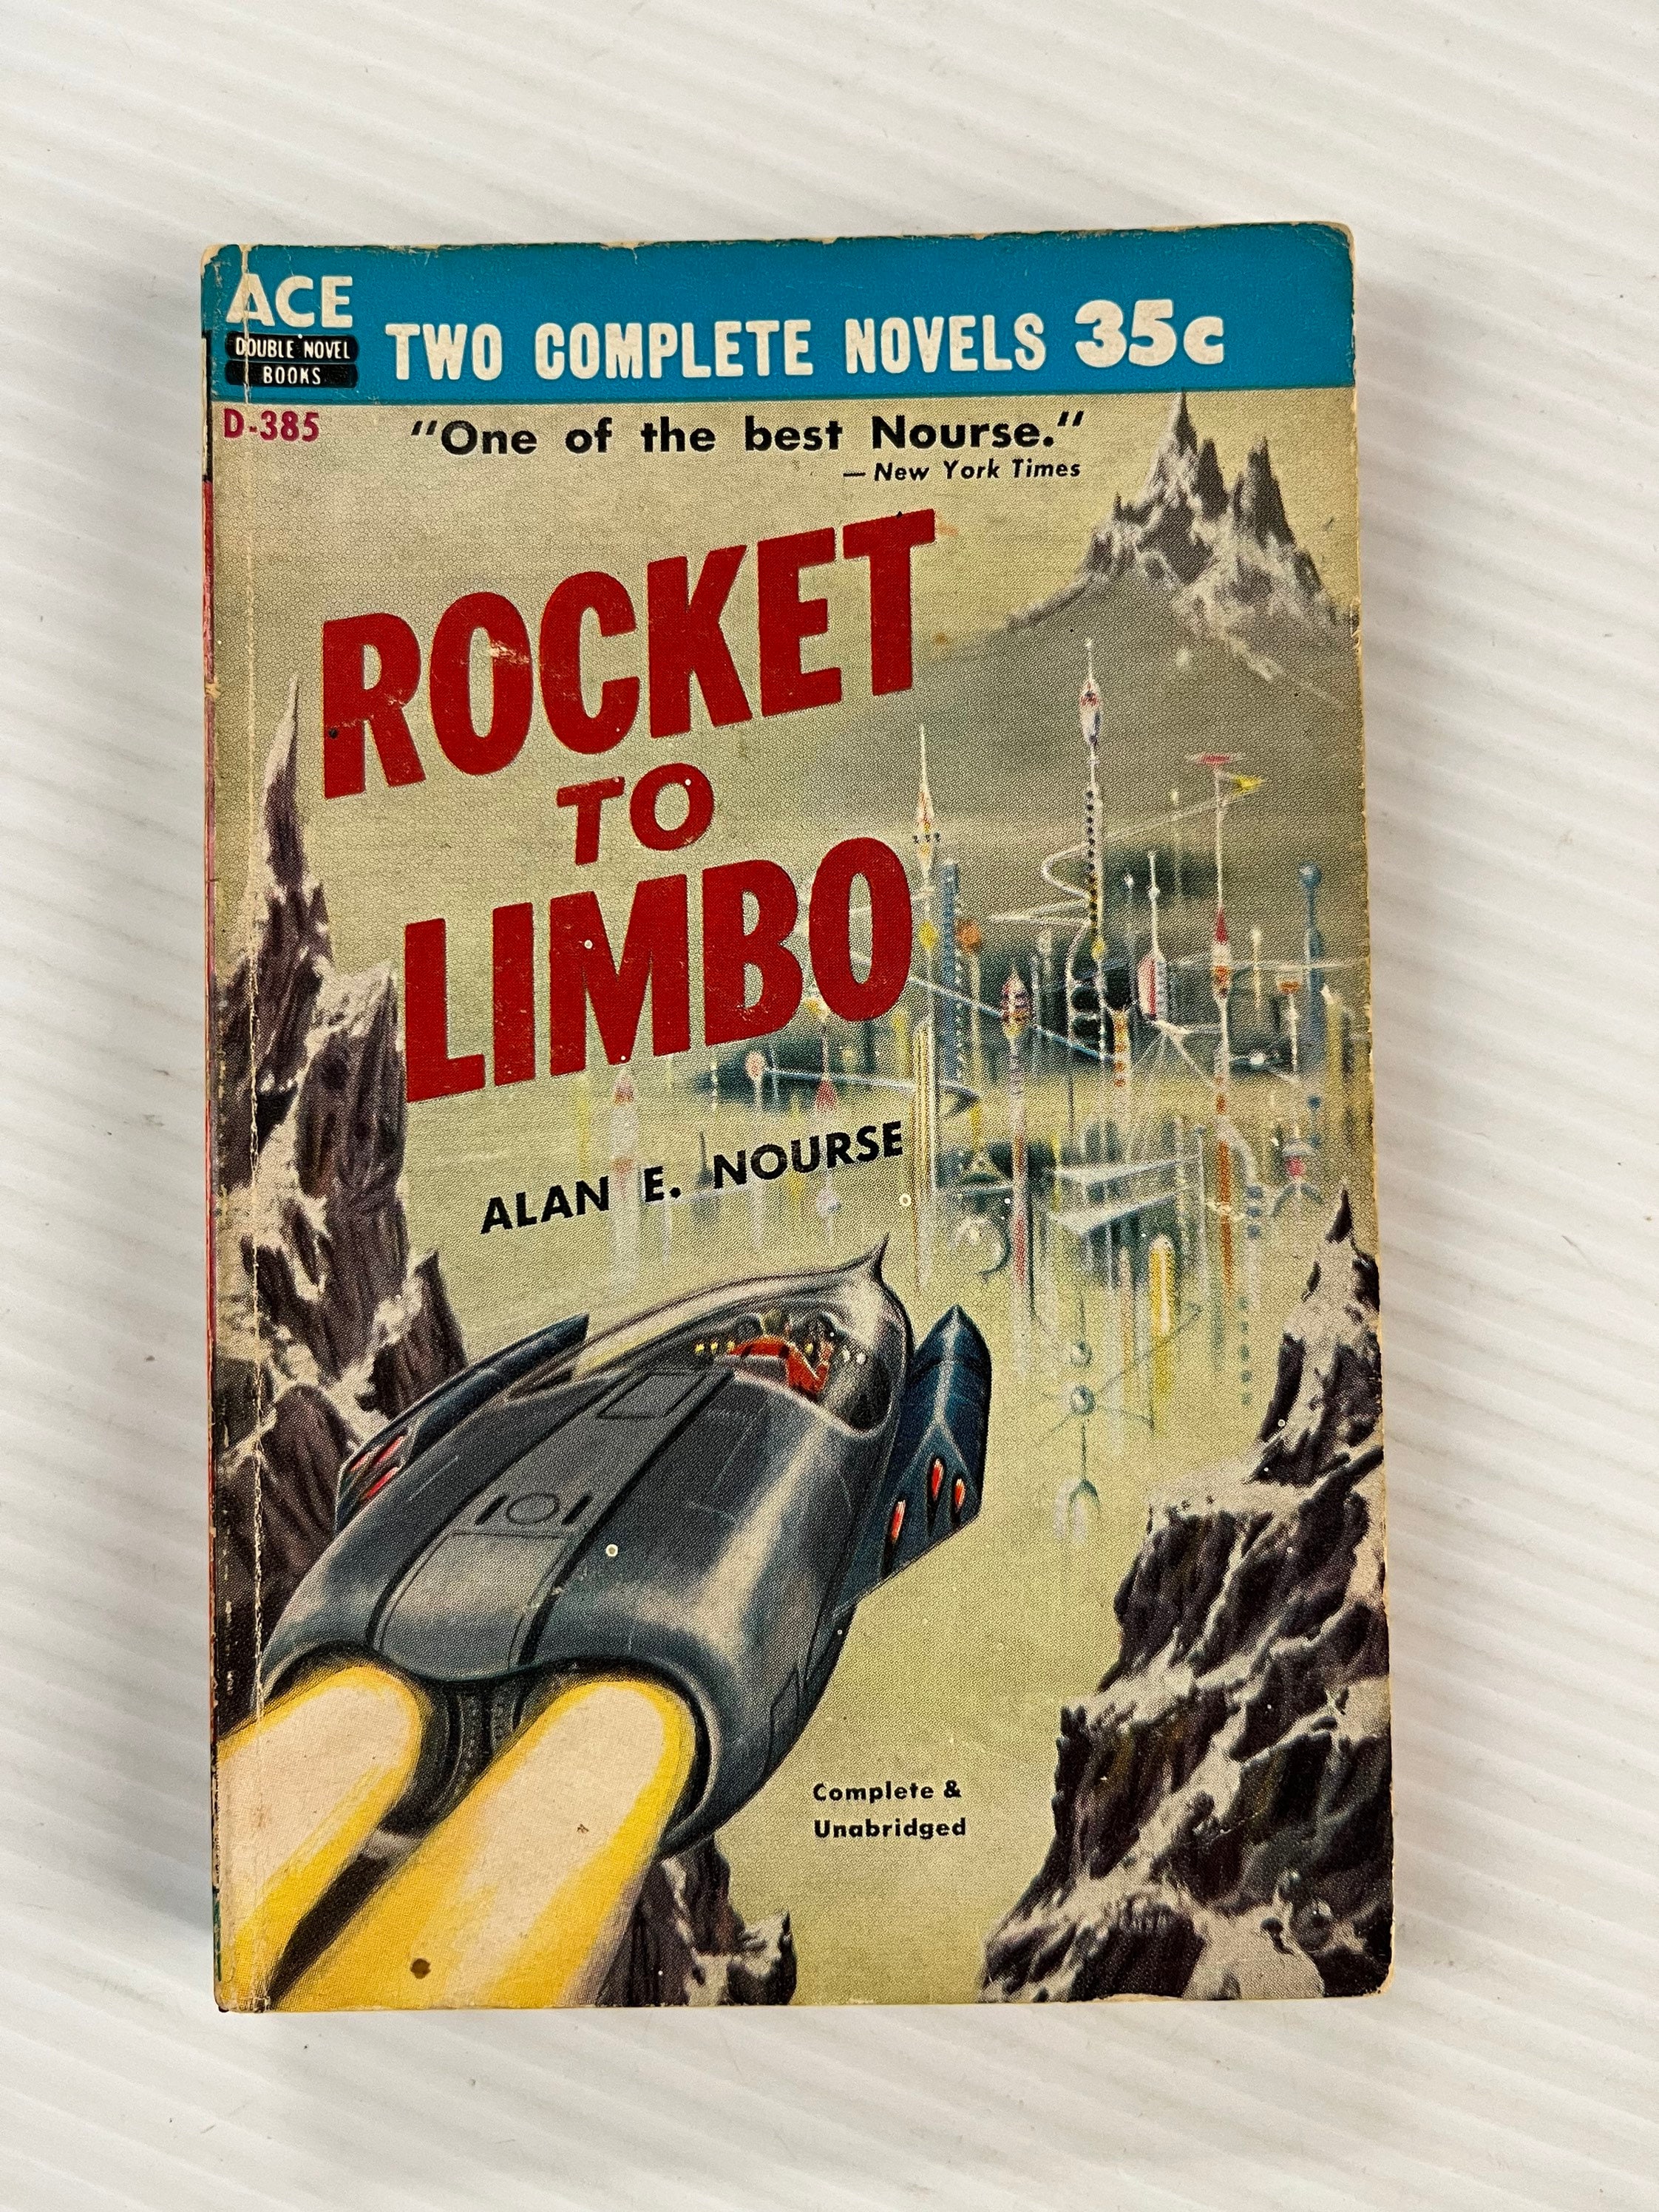 Rocket to Limbo by Alan E